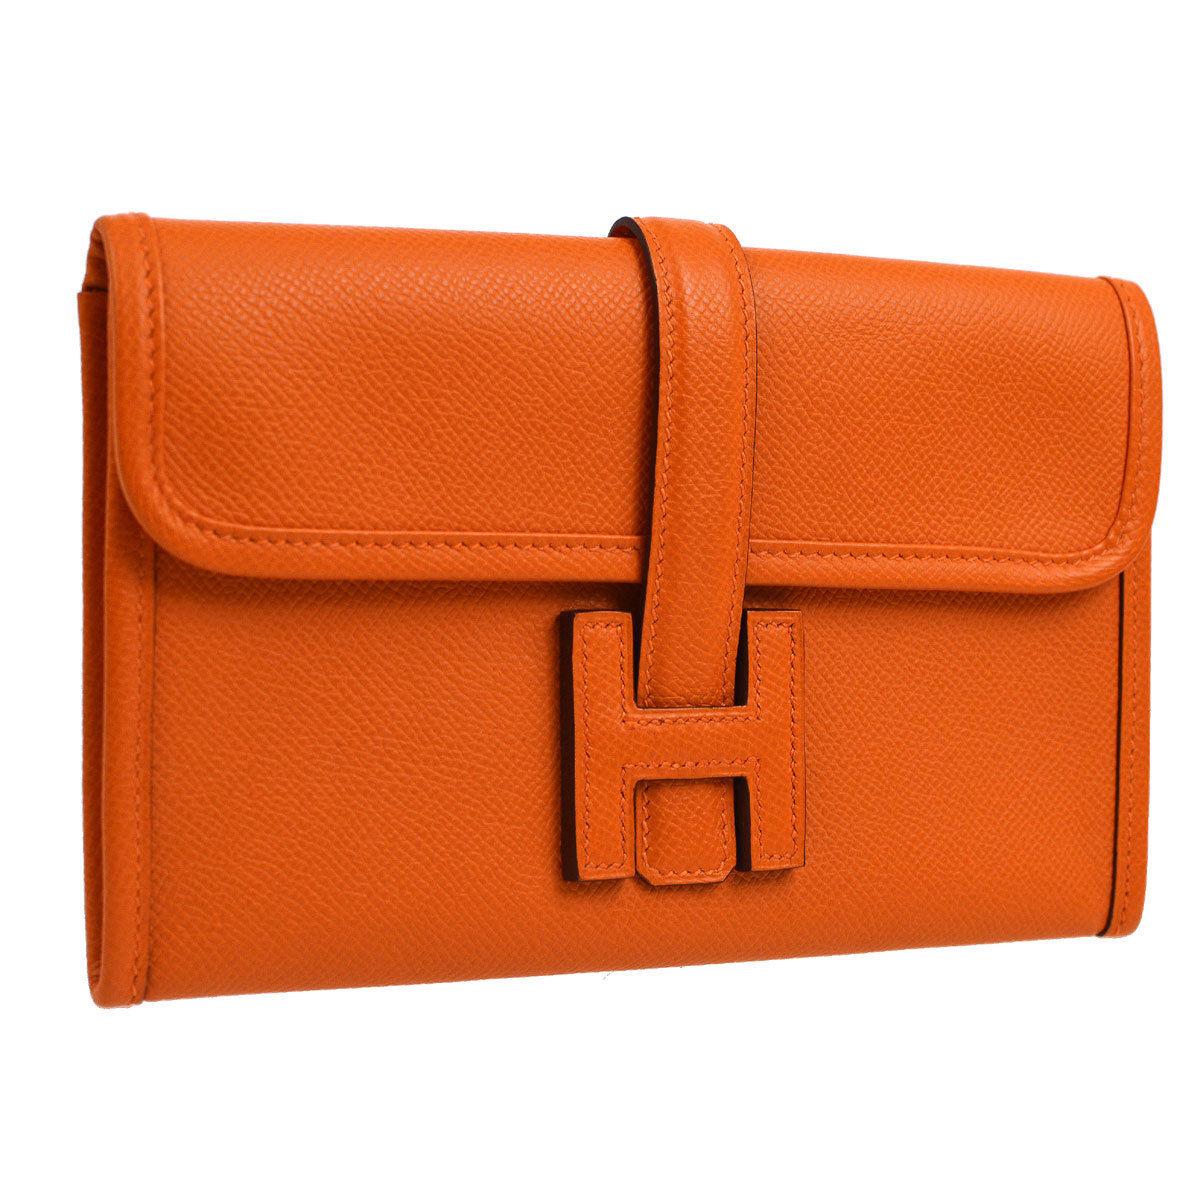 Hermes Orange Leather 'H' Jige Small Mini Logo Evening Clutch Flap Bag